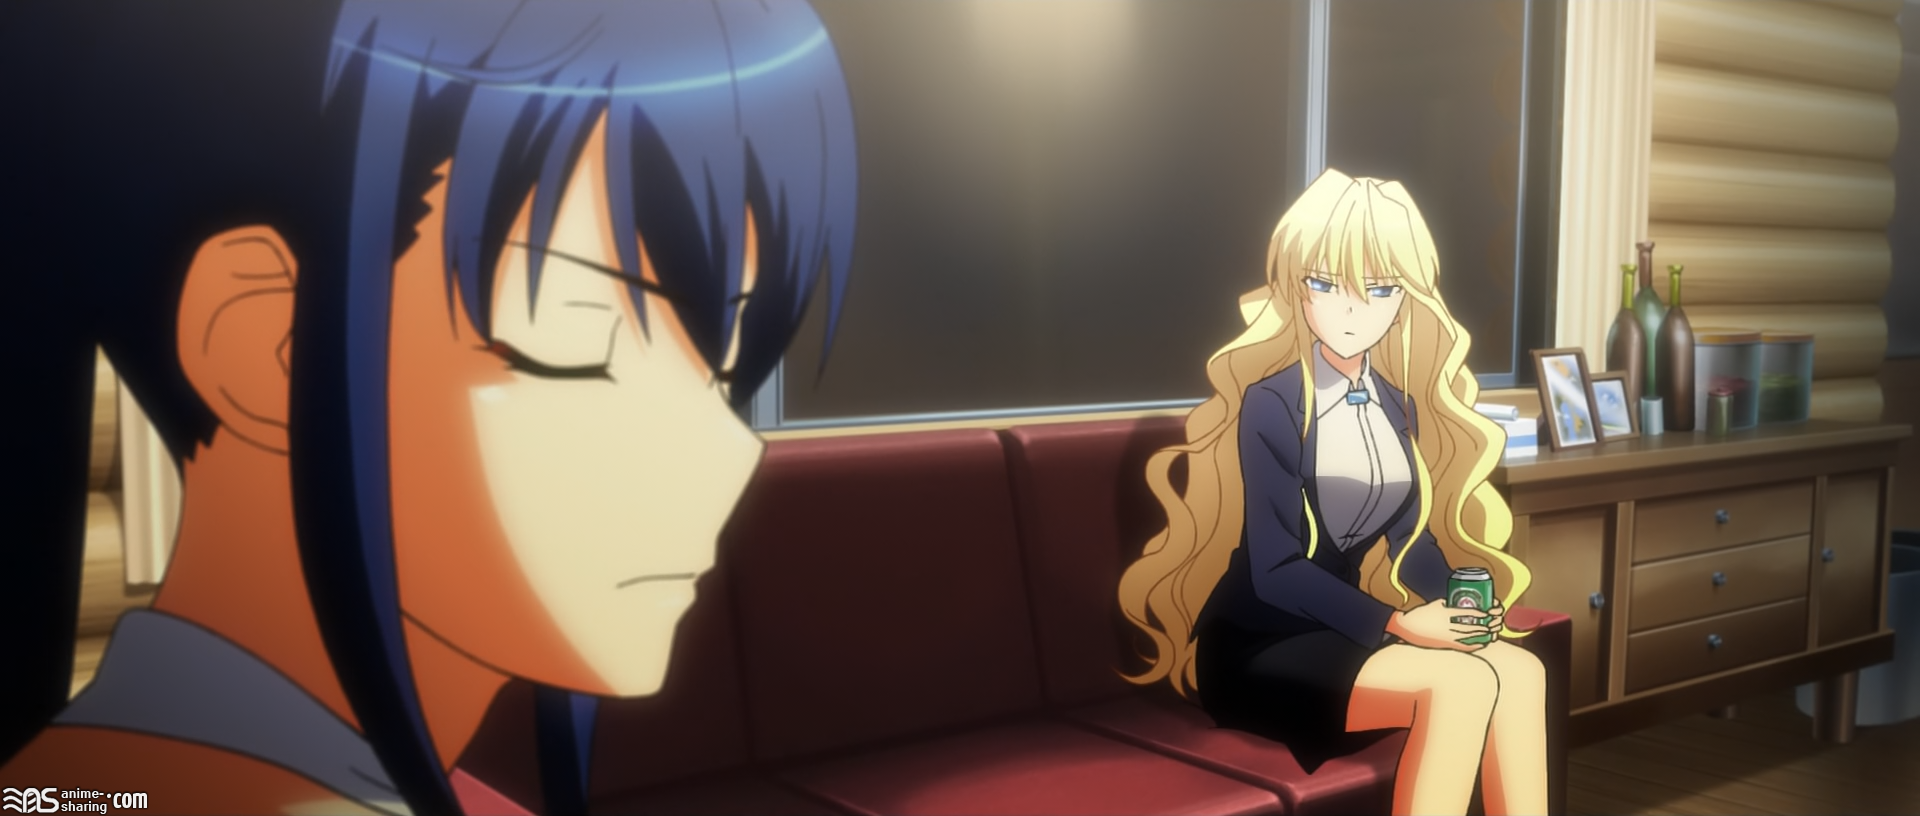 Spoilers] Grisaia no Rakuen - Episode 1 [Discussion] : r/anime